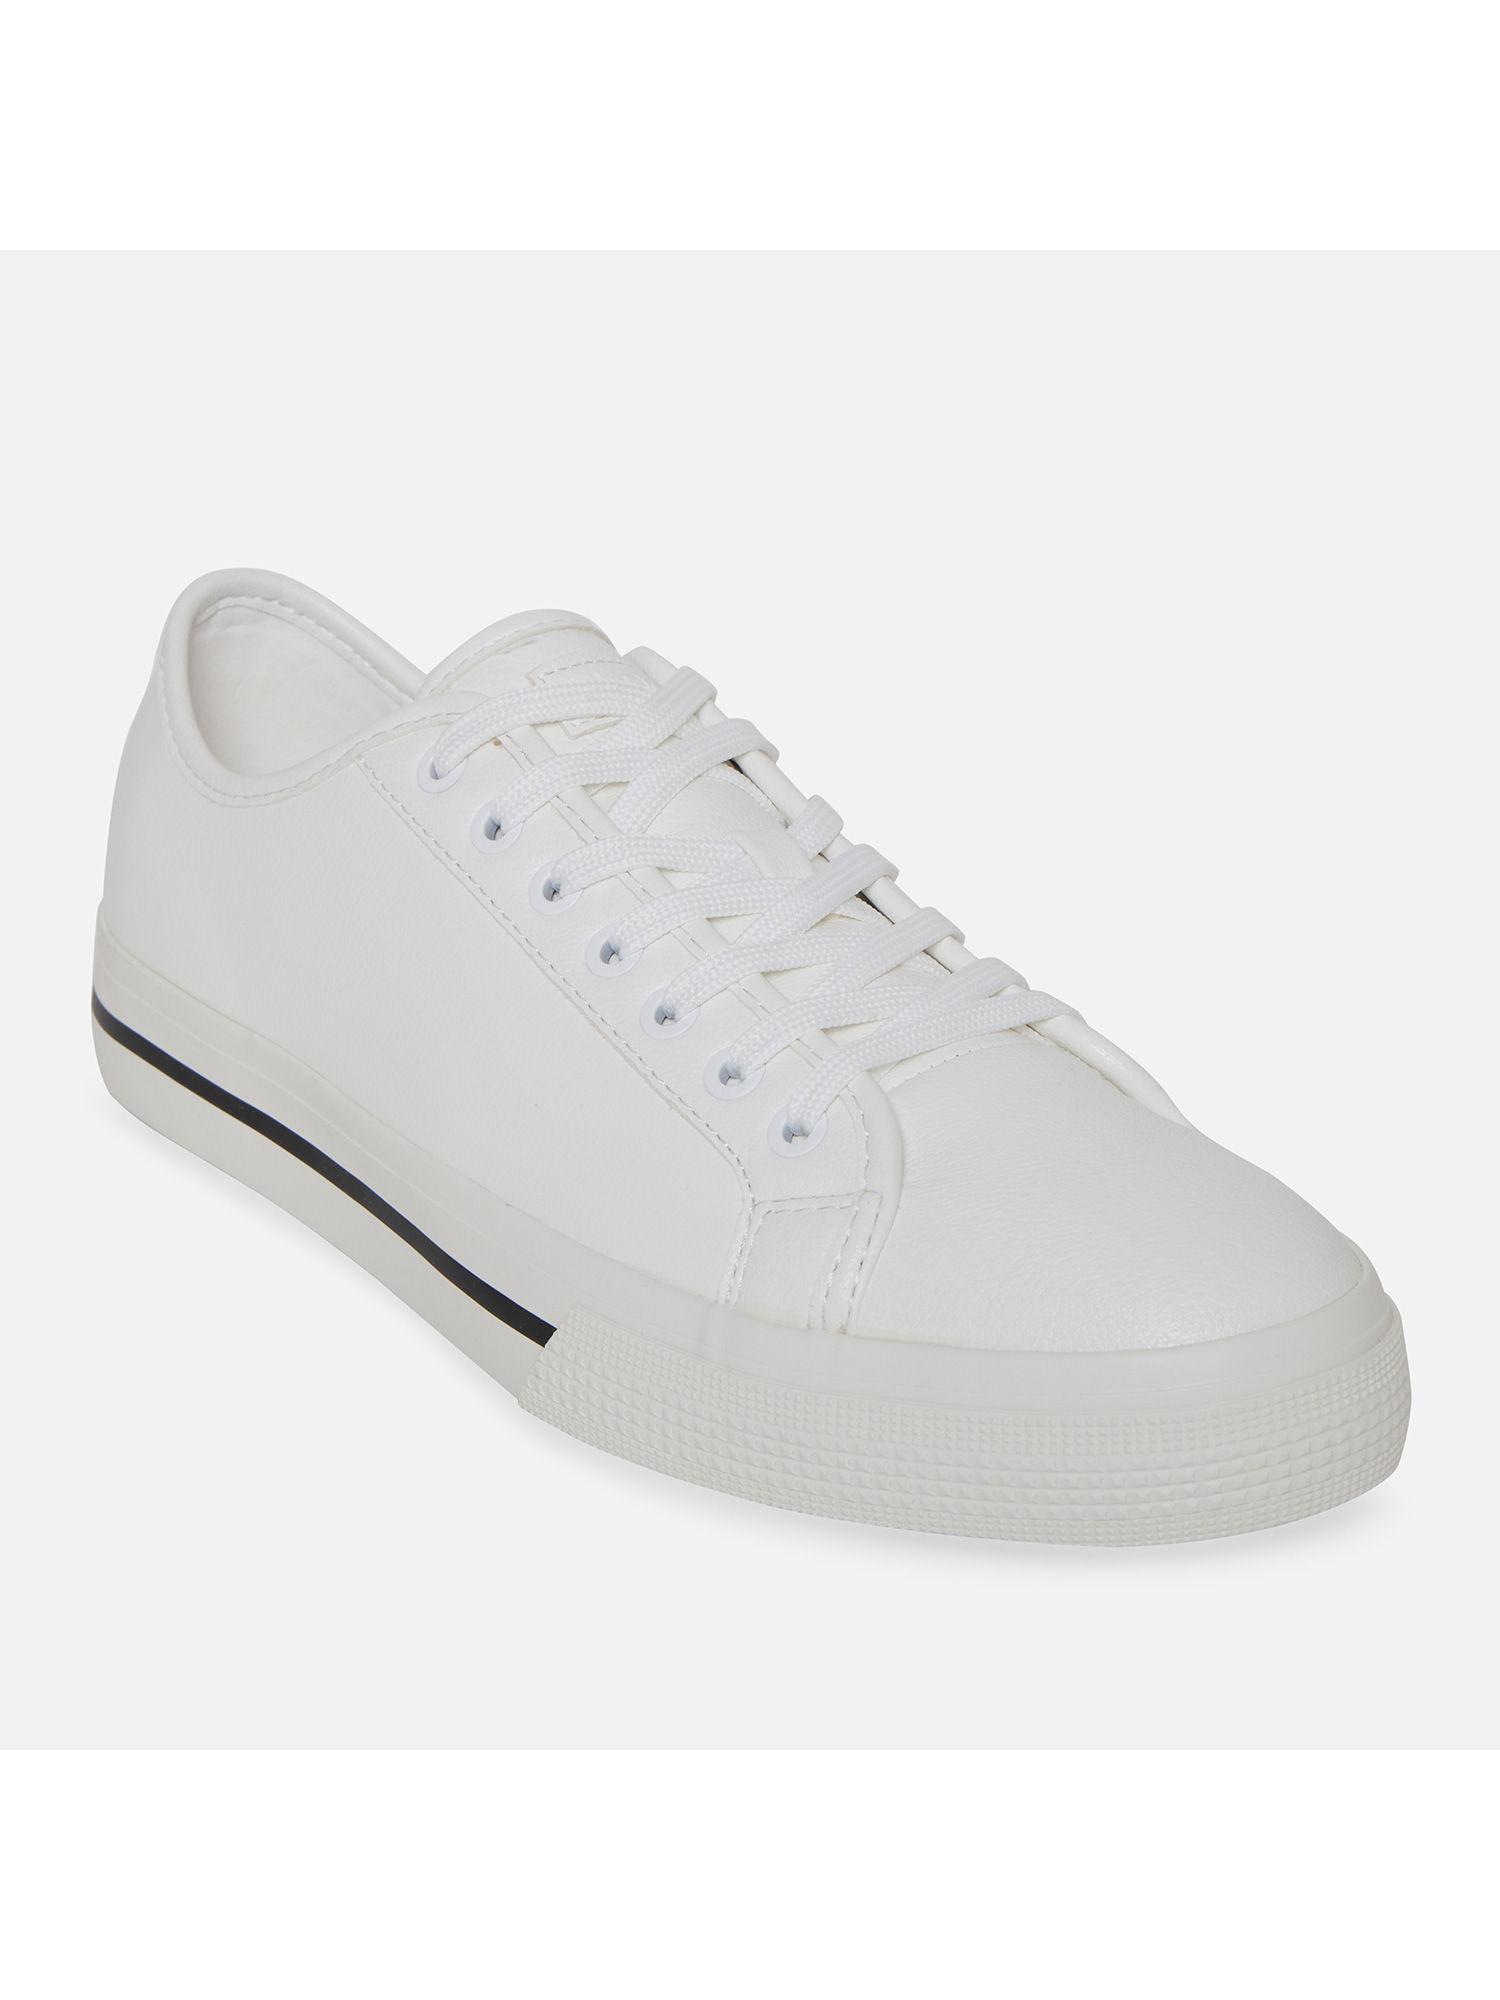 strollen-solid-white-sneakers